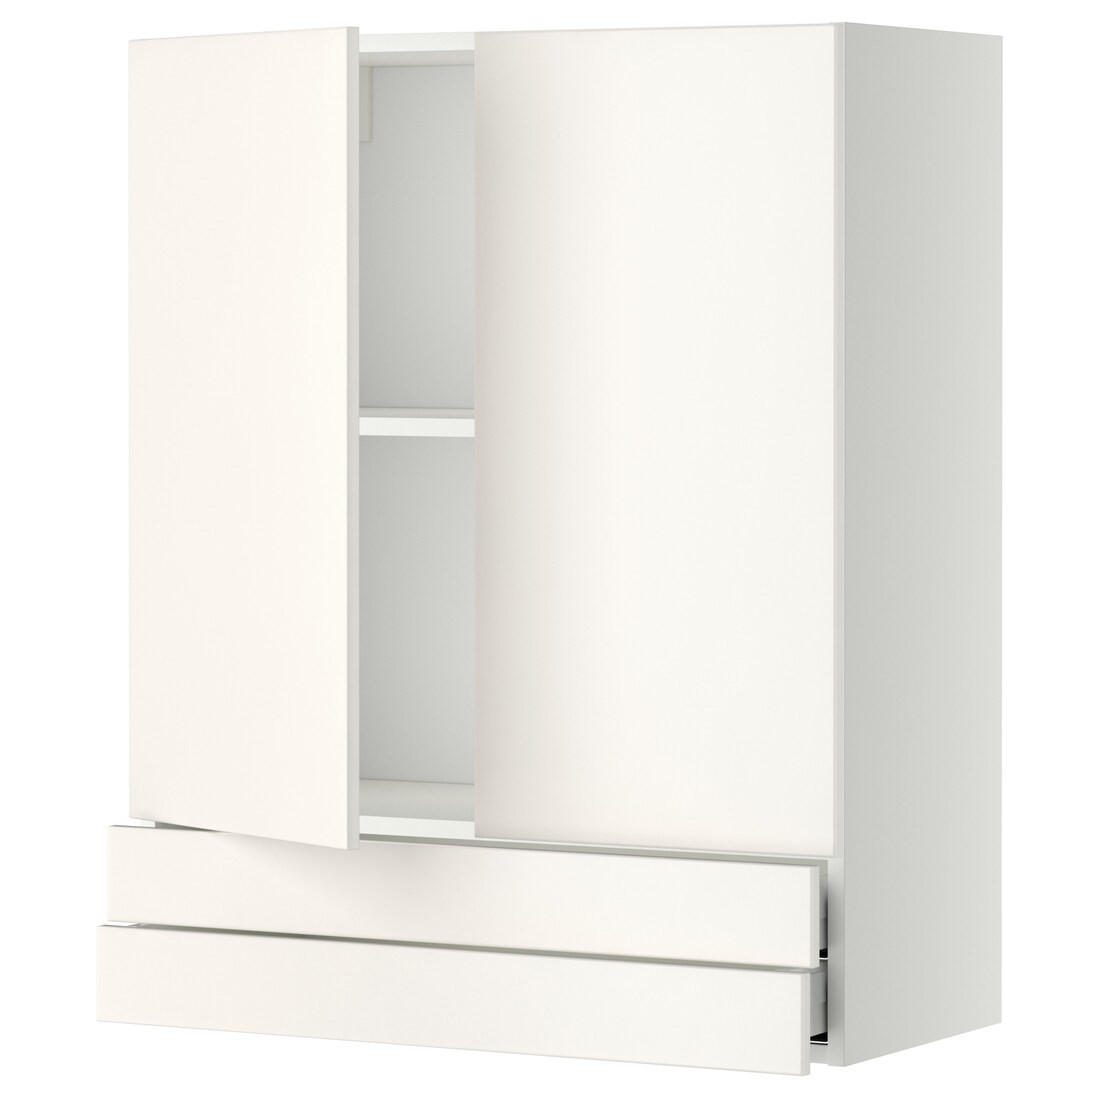 IKEA METOD МЕТОД / MAXIMERA МАКСИМЕРА Навесной шкаф / 2 дверцы / 2 ящика, белый / Veddinge белый, 80x100 см 99457340 994.573.40